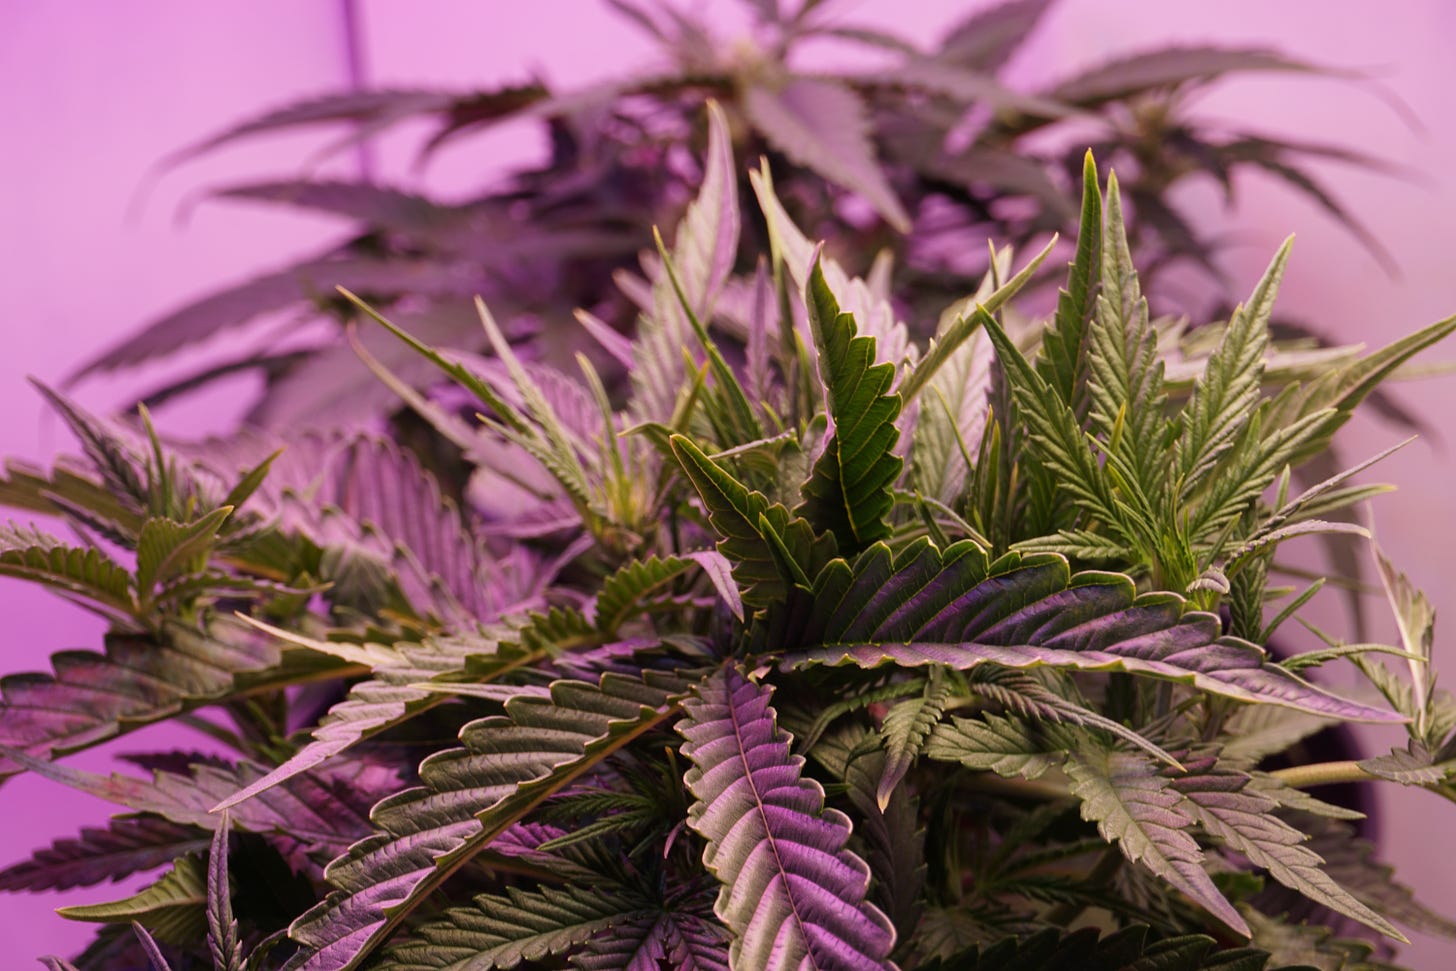 Tall, green, cannabis plants growing under purple lights. 